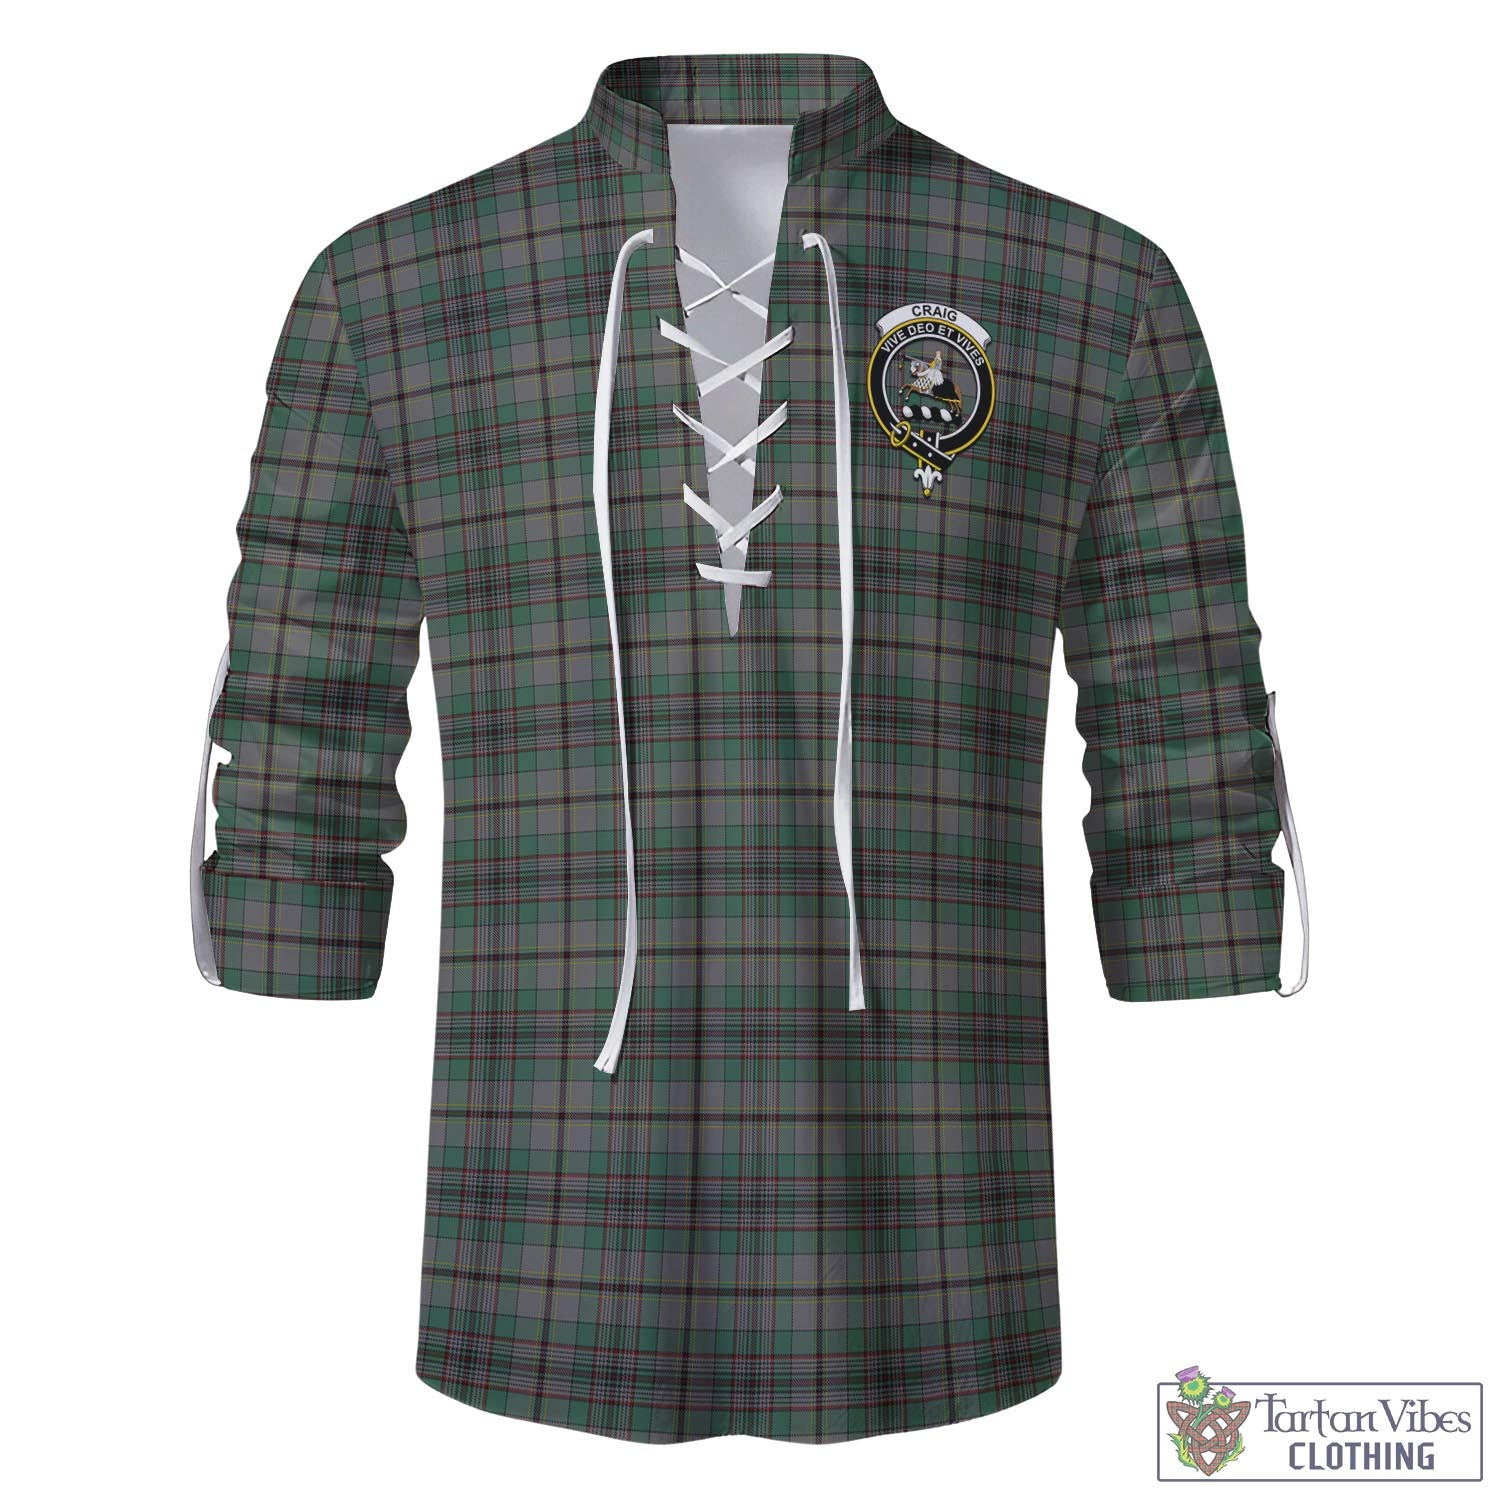 Tartan Vibes Clothing Craig Tartan Men's Scottish Traditional Jacobite Ghillie Kilt Shirt with Family Crest